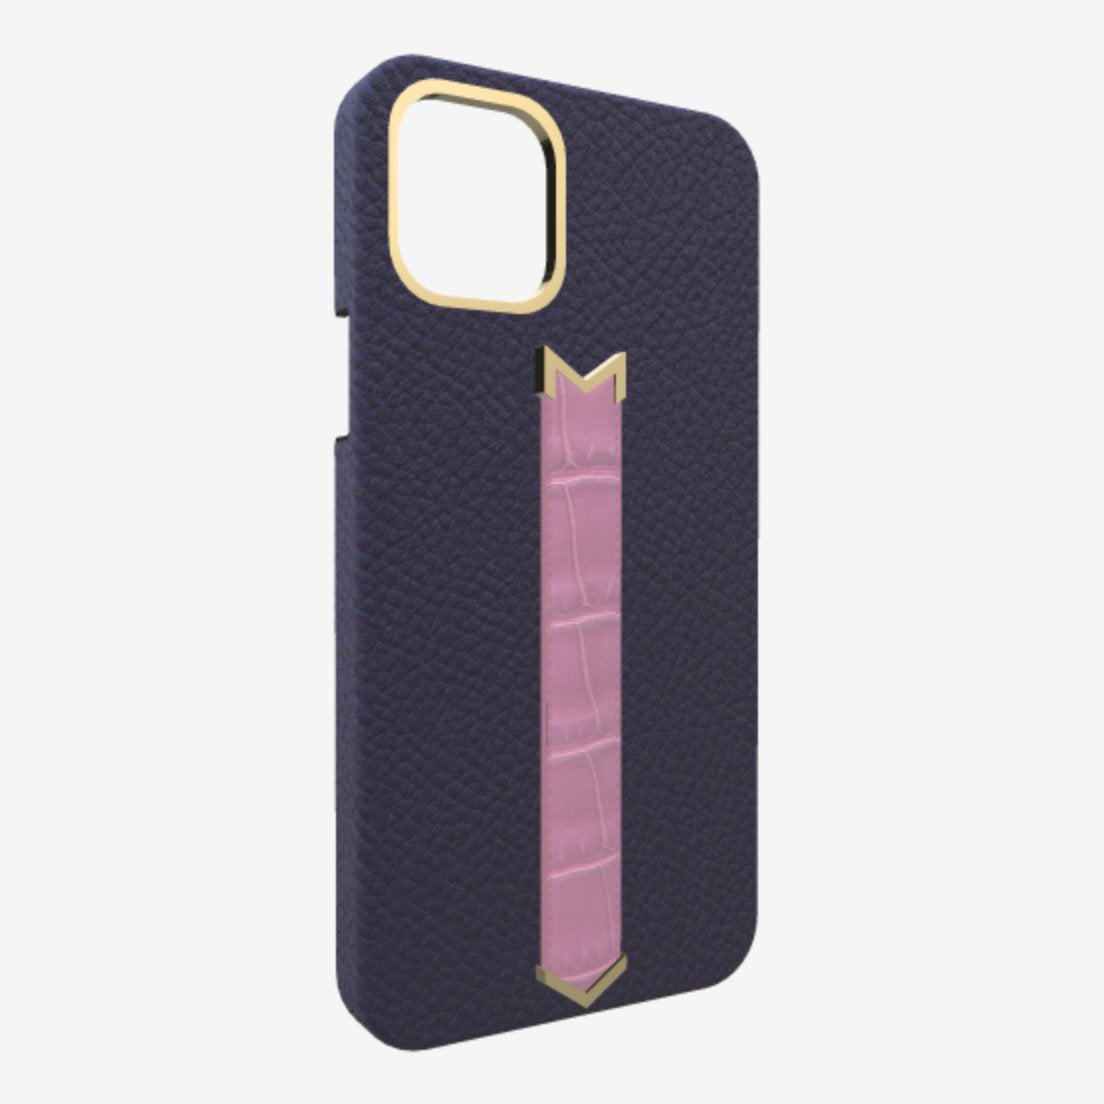 Gold Finger Strap Case for iPhone 13 Pro Max in Genuine Calfskin and Alligator Navy Blue Lavender Laugh 